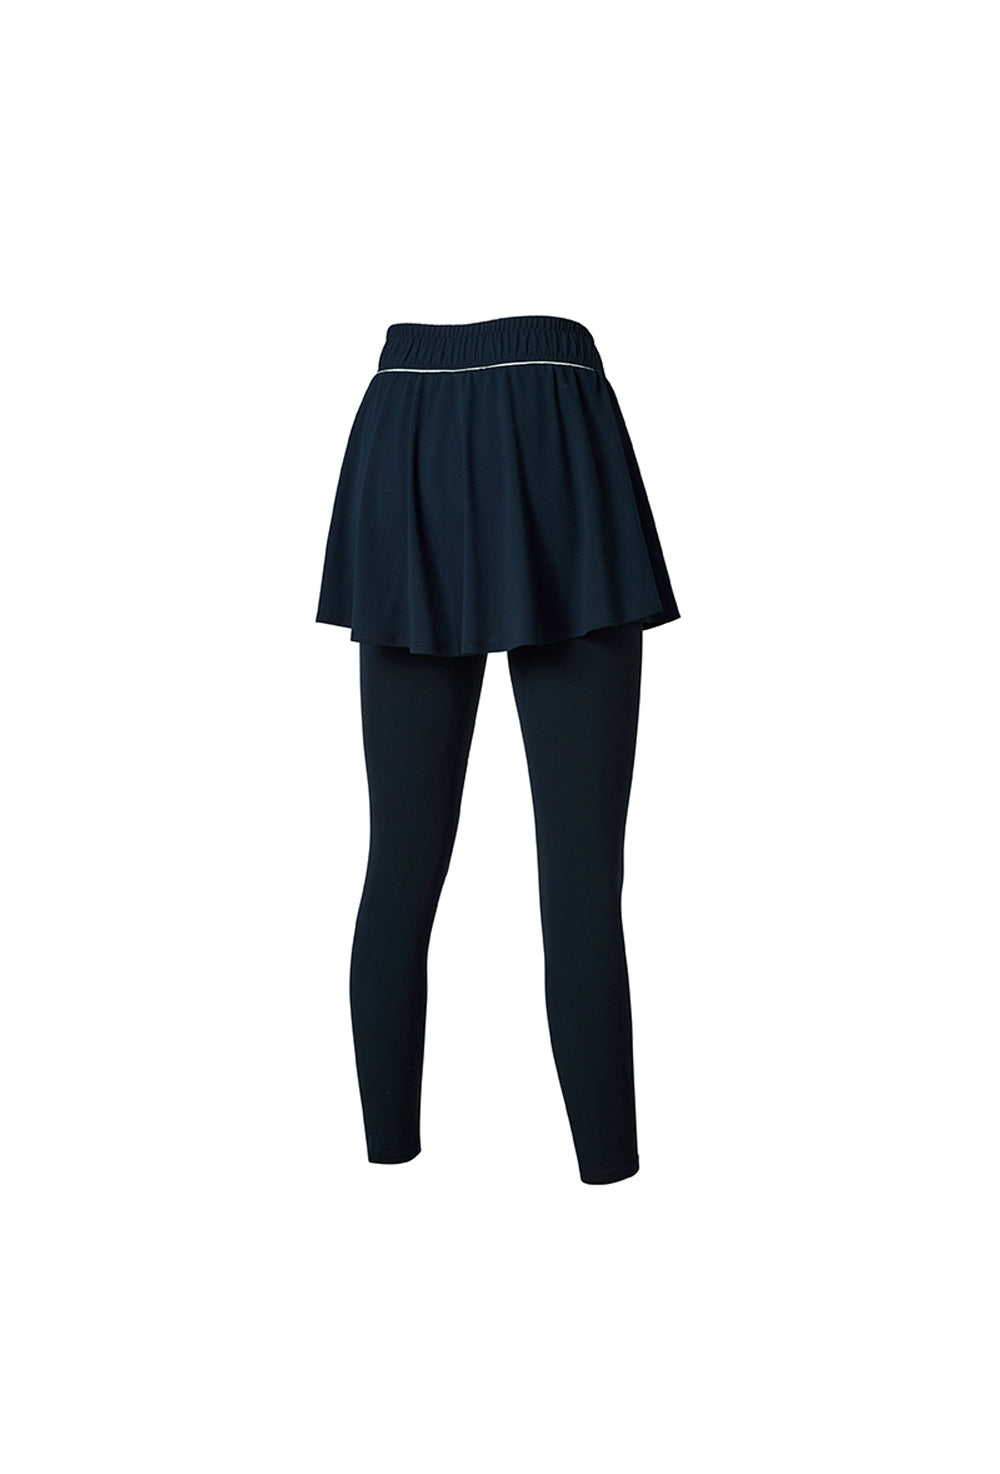 Pique Flare Skirt Leggings - Sailor Navy (Clearance)